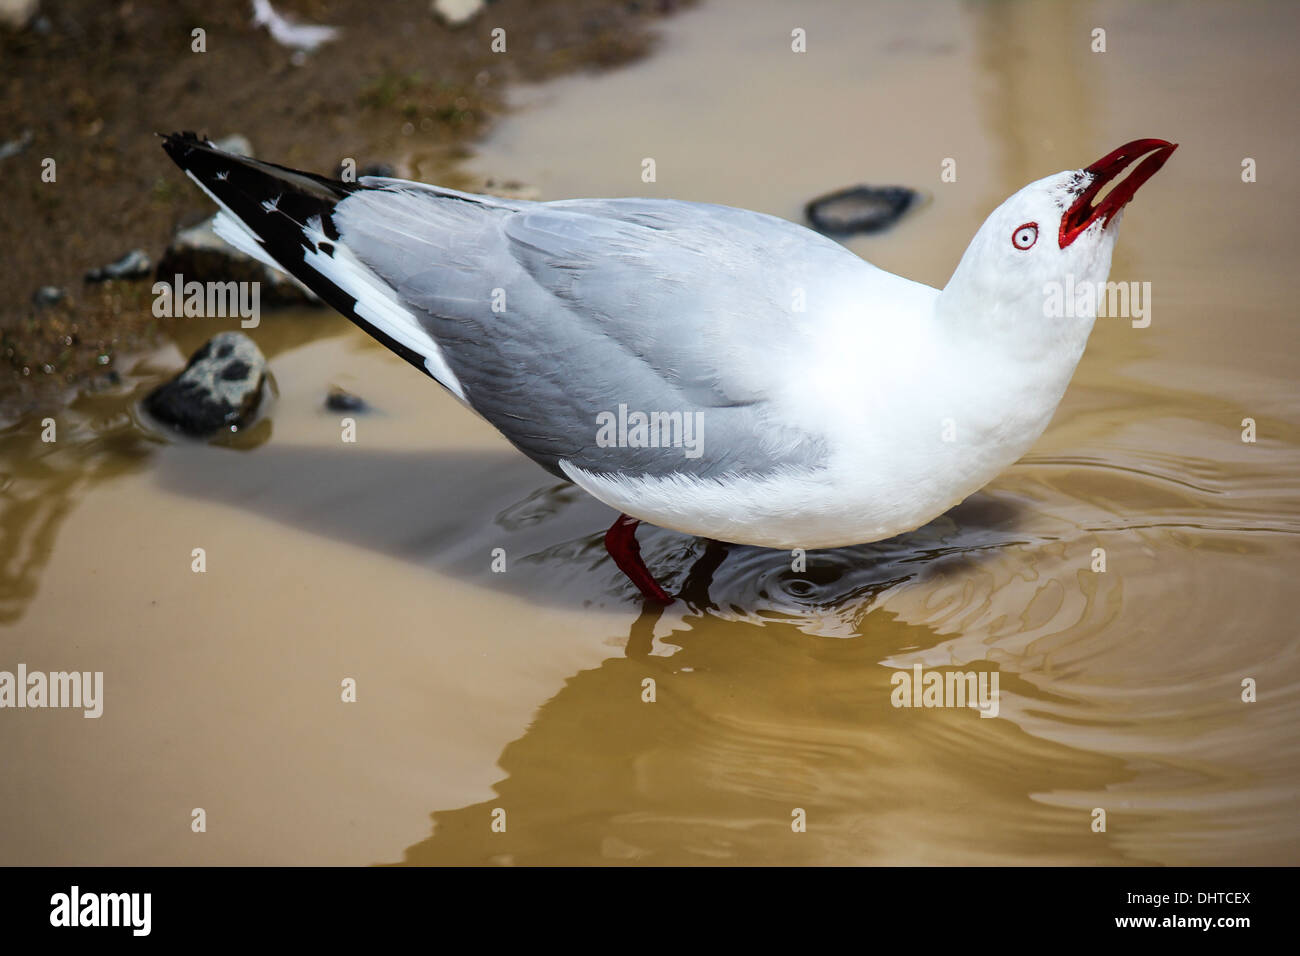 Close-up of a red-billed gull drinking muddy water, Otago, Peninsula, New Zealand Stock Photo